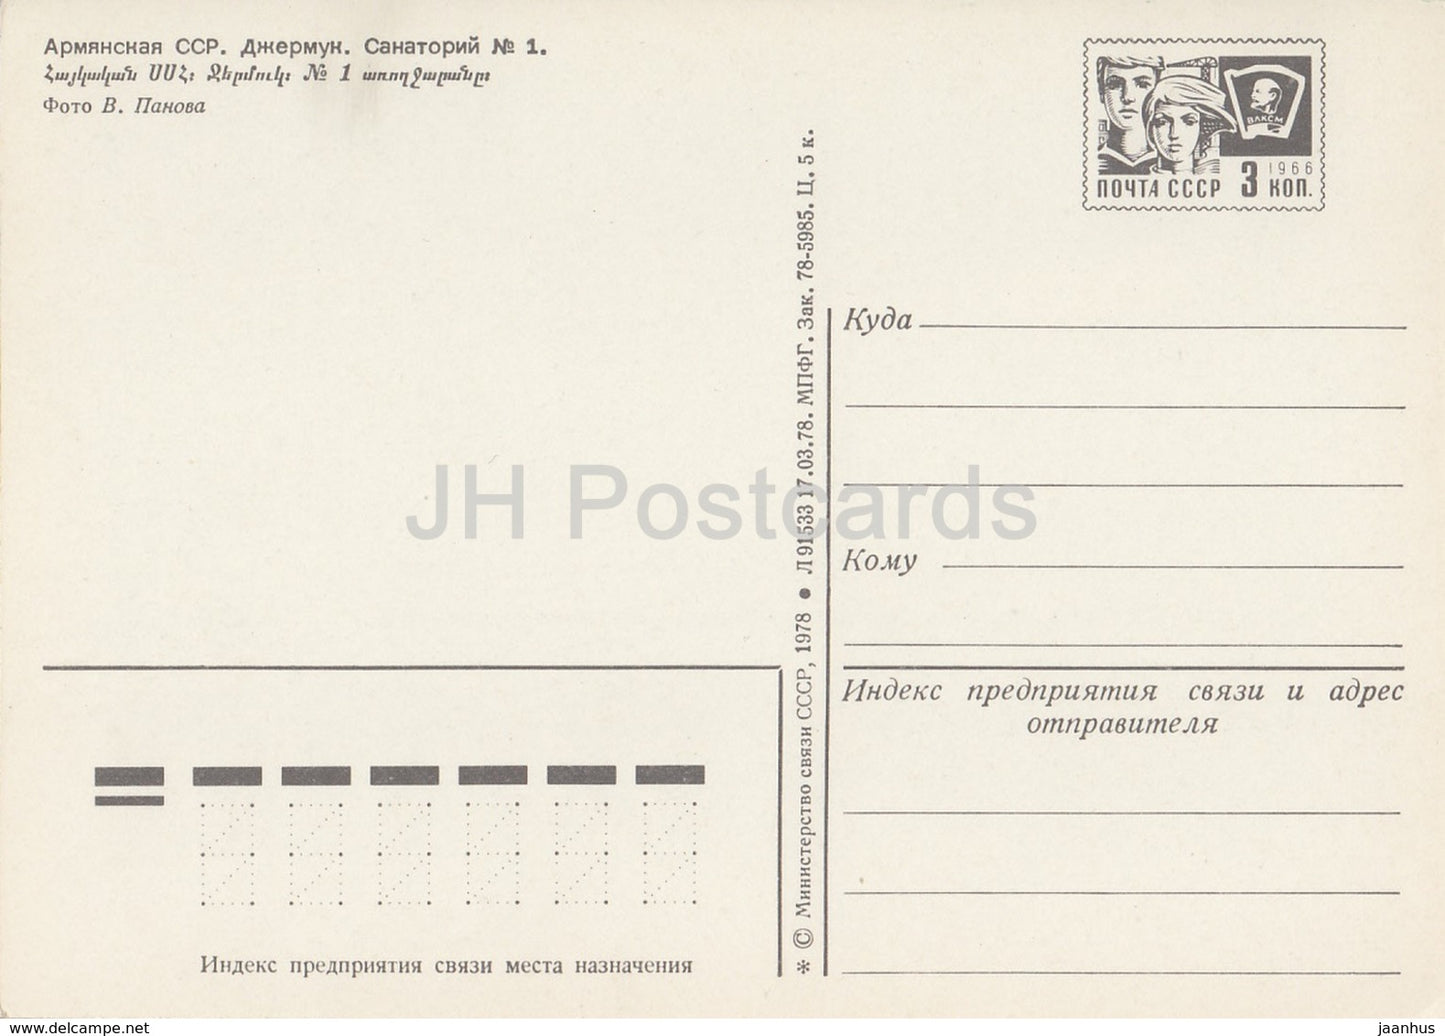 Jermuk Sanatorium No. 1 - postal stationery - 1978 - Armenia USSR -  unused